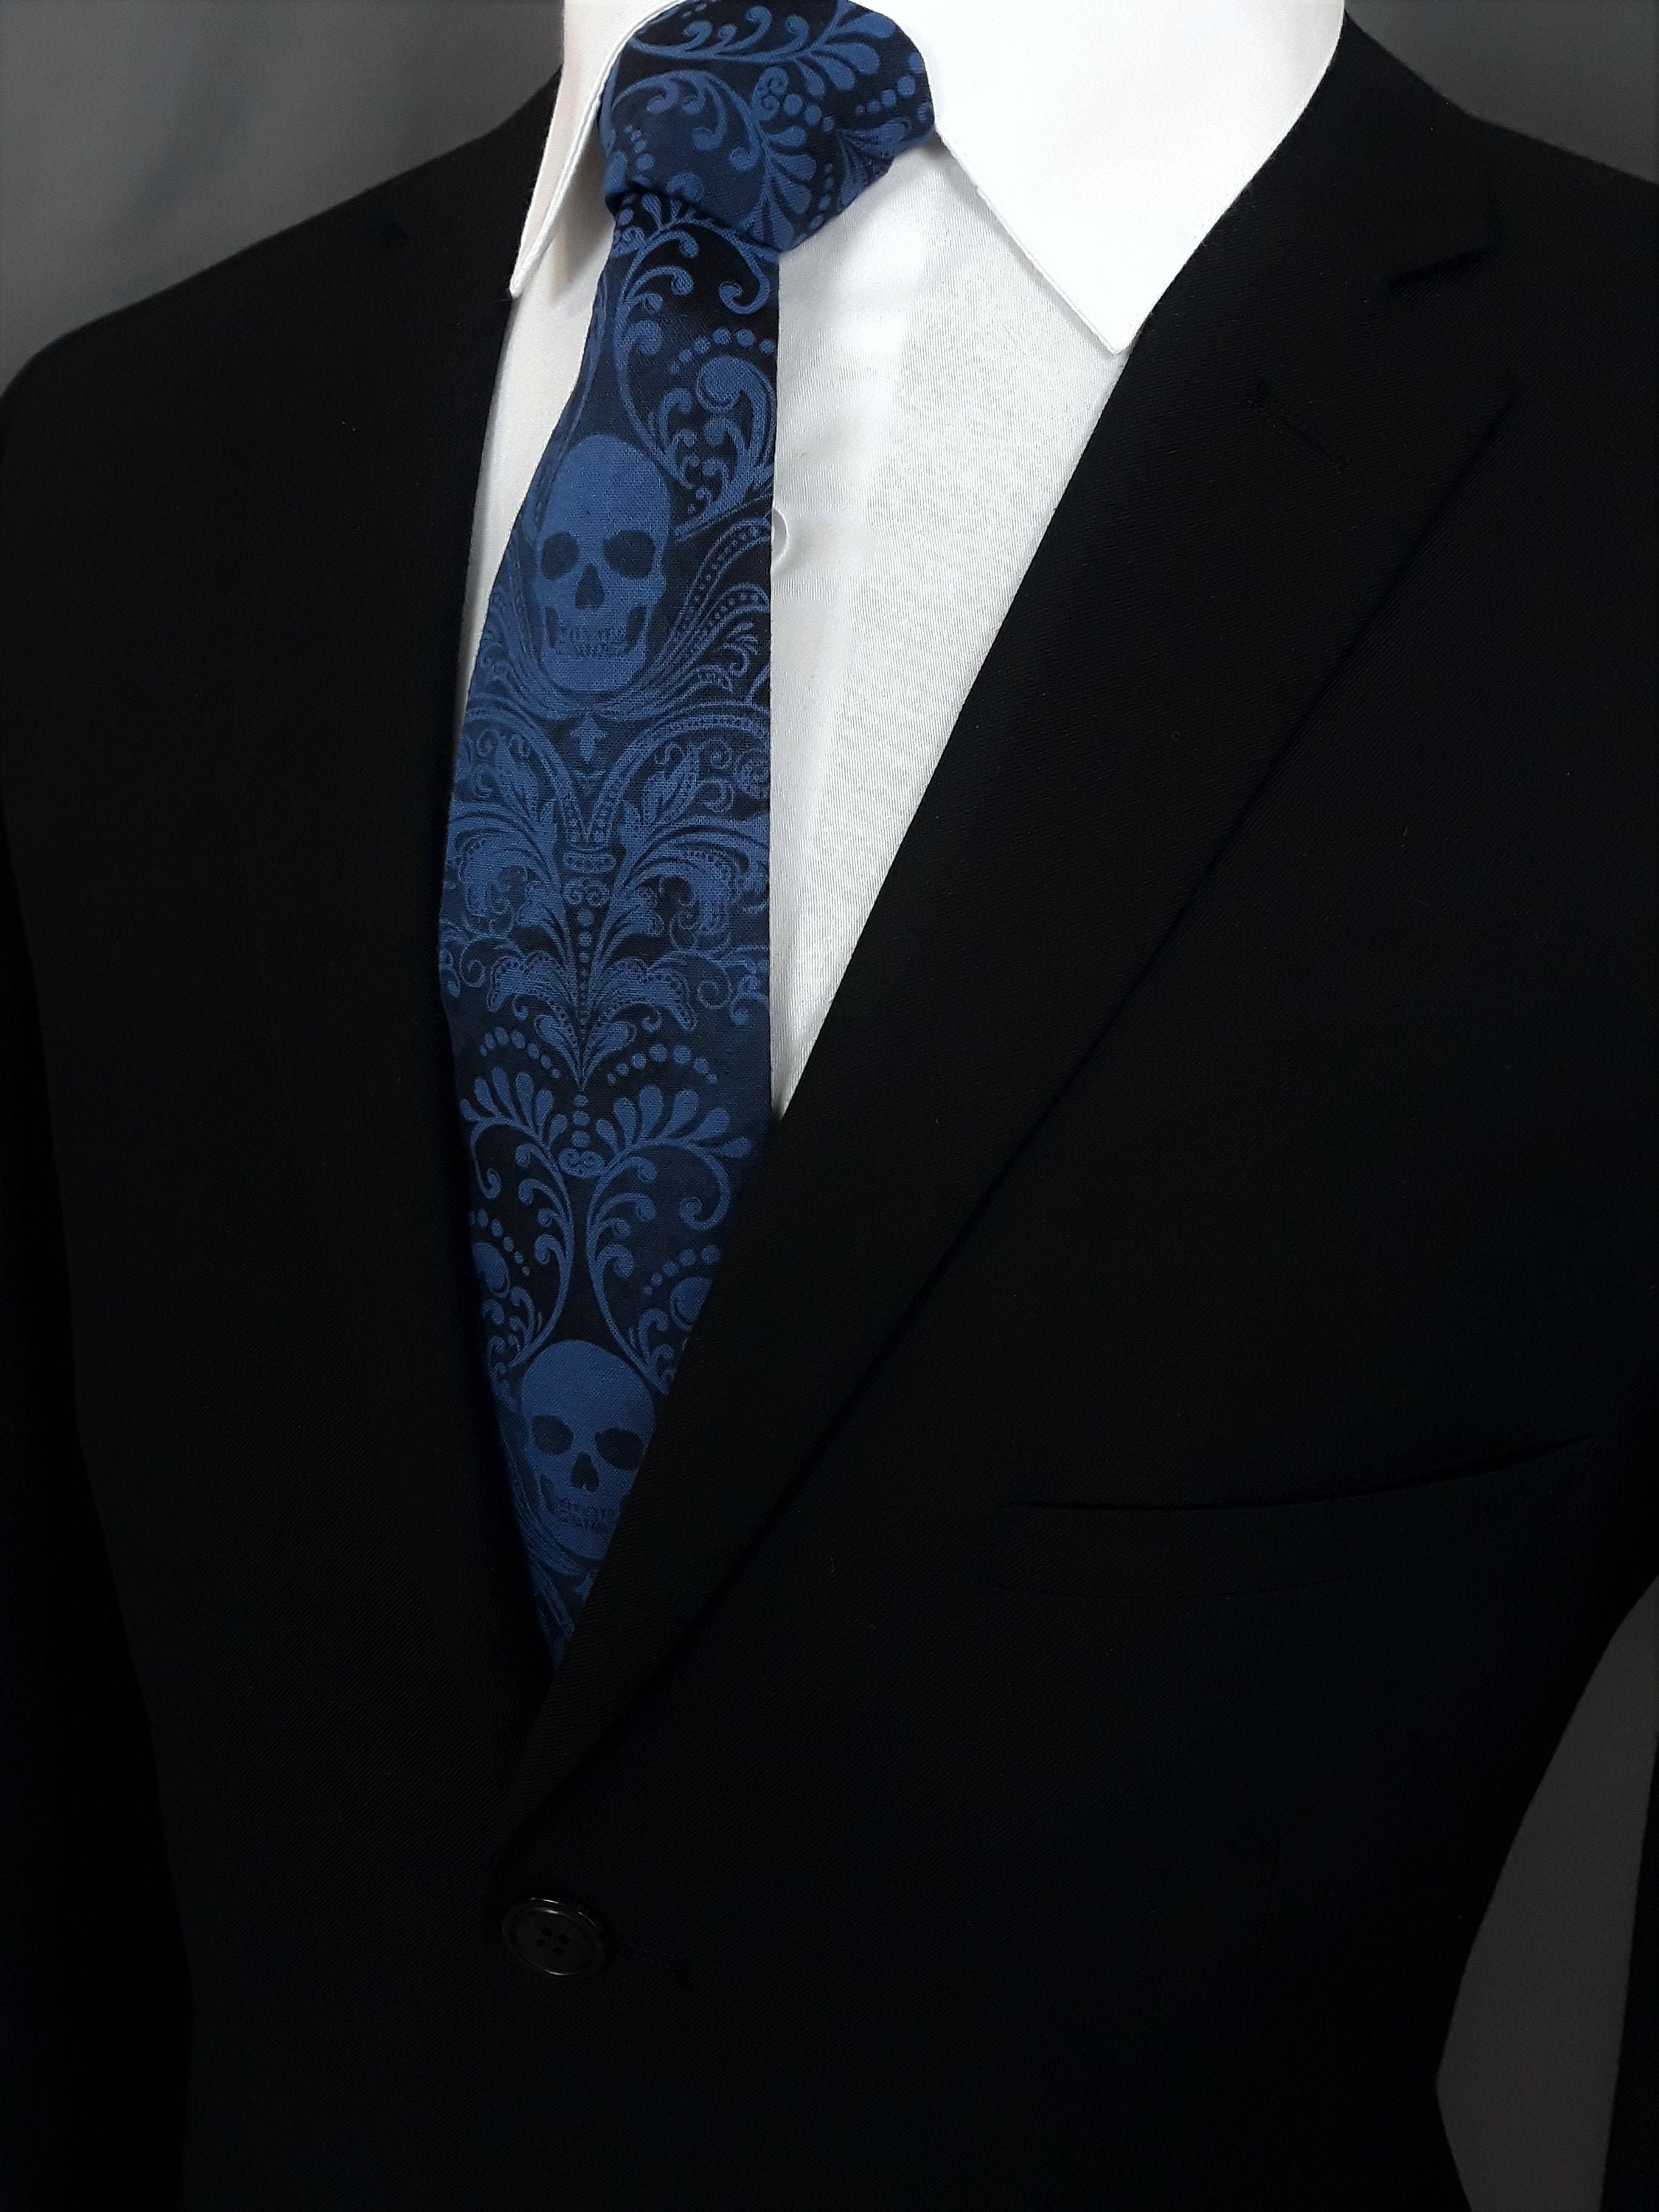 Black with Royal Blue Skull Tie – Gothic Wedding Blue Skull Neckties